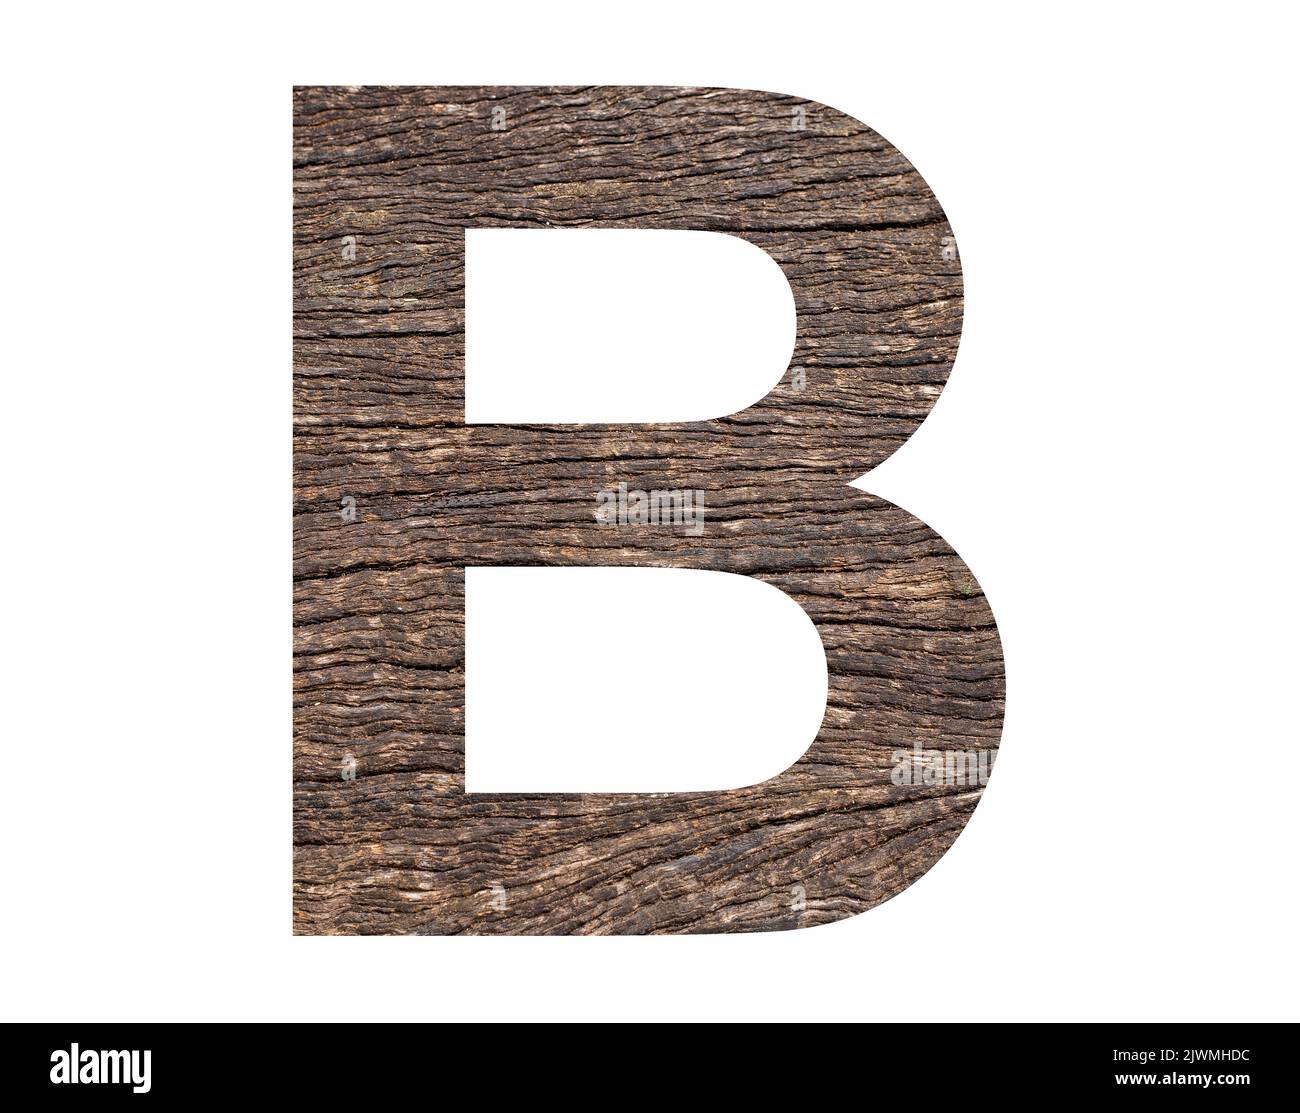 Alphabet letter B - Rustic tree bark background Stock Photo - Alamy